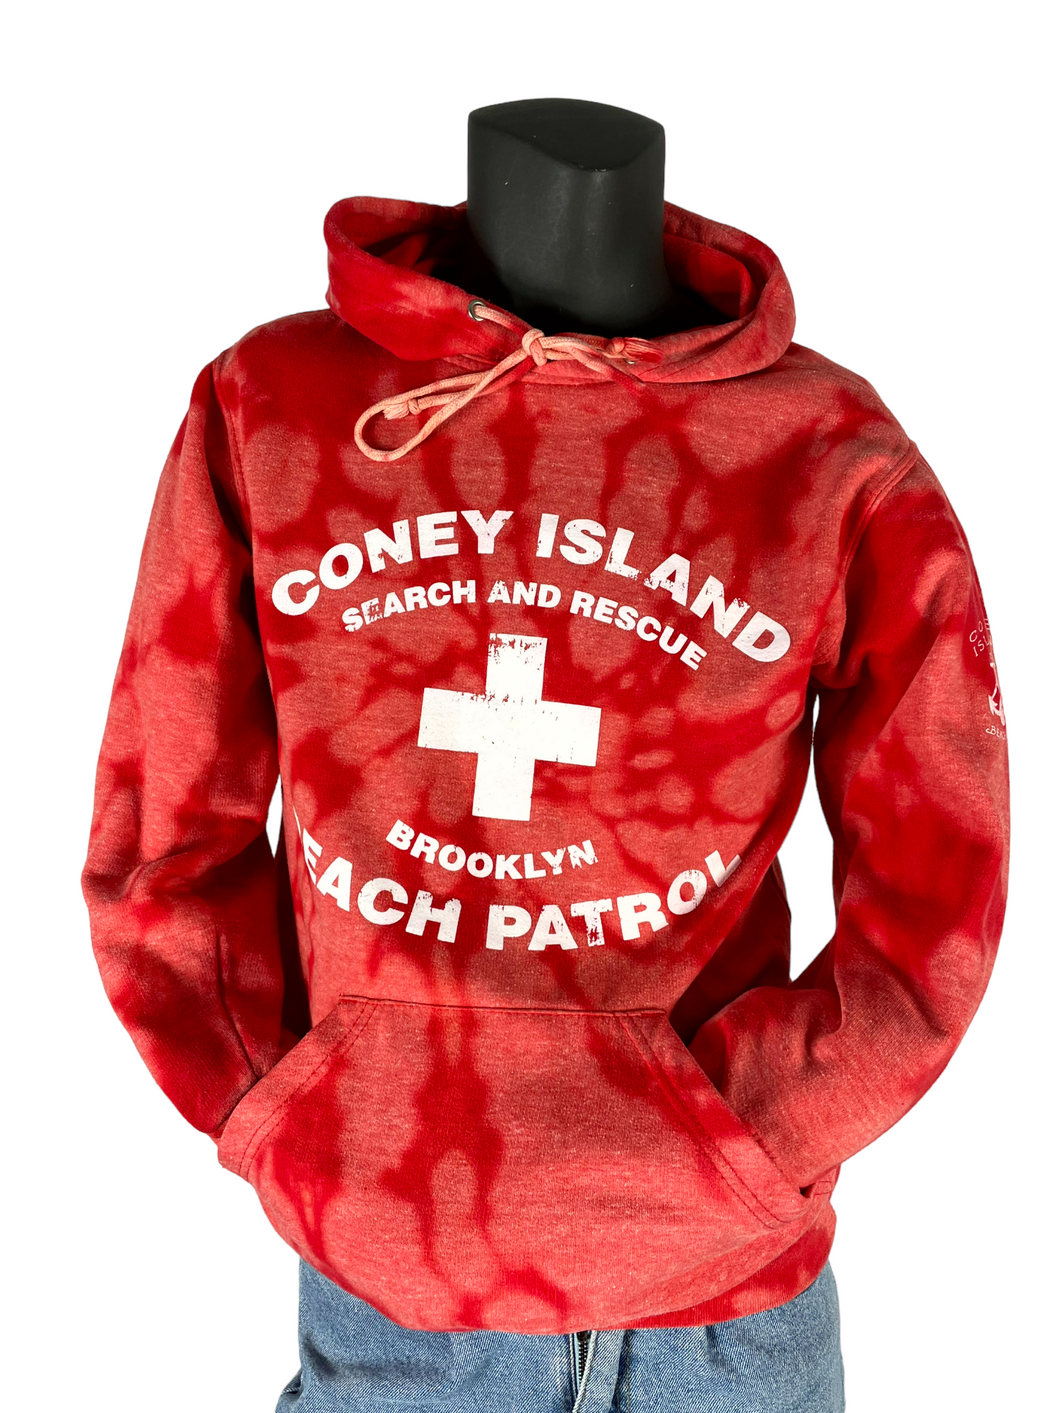 Bleach Dye Coney Island Sweatshirt - S